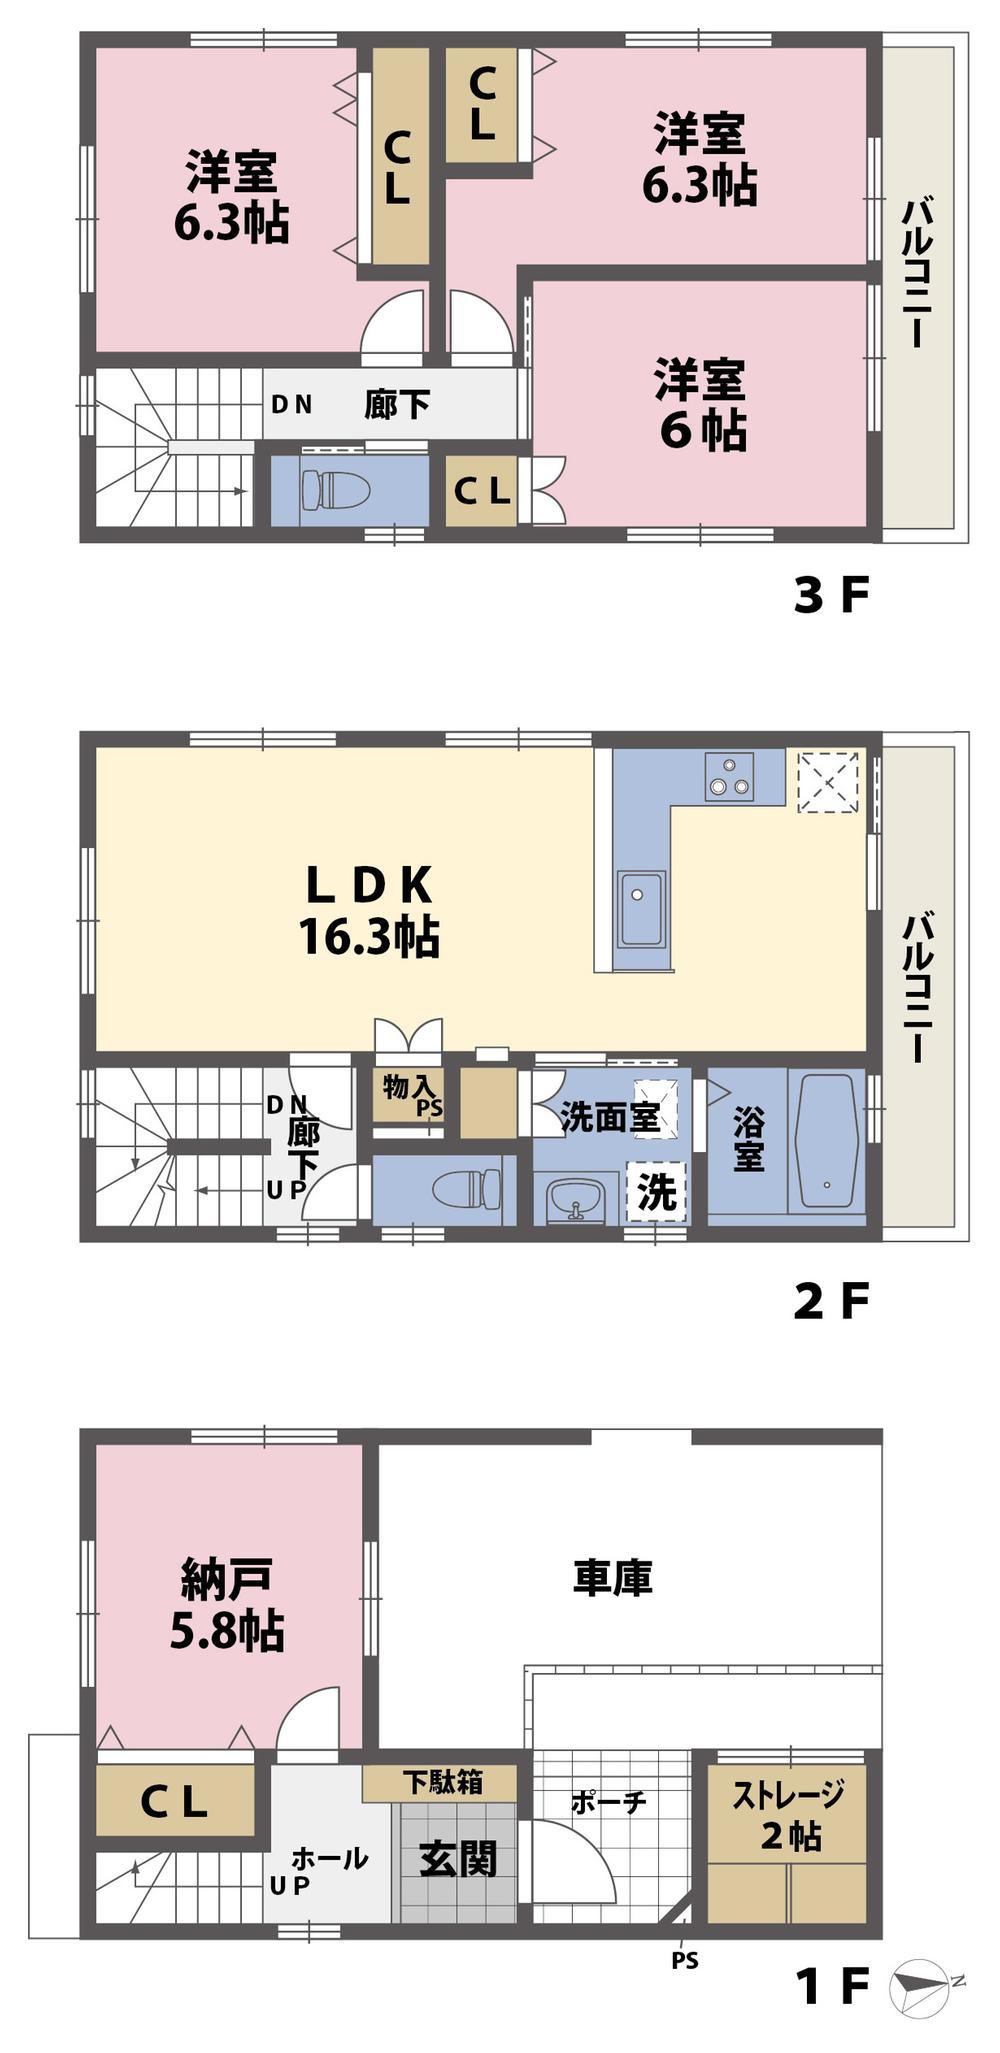 Floor plan. (No.2), Price 31,980,000 yen, 4LDK, Land area 75.32 sq m , Building area 102.53 sq m